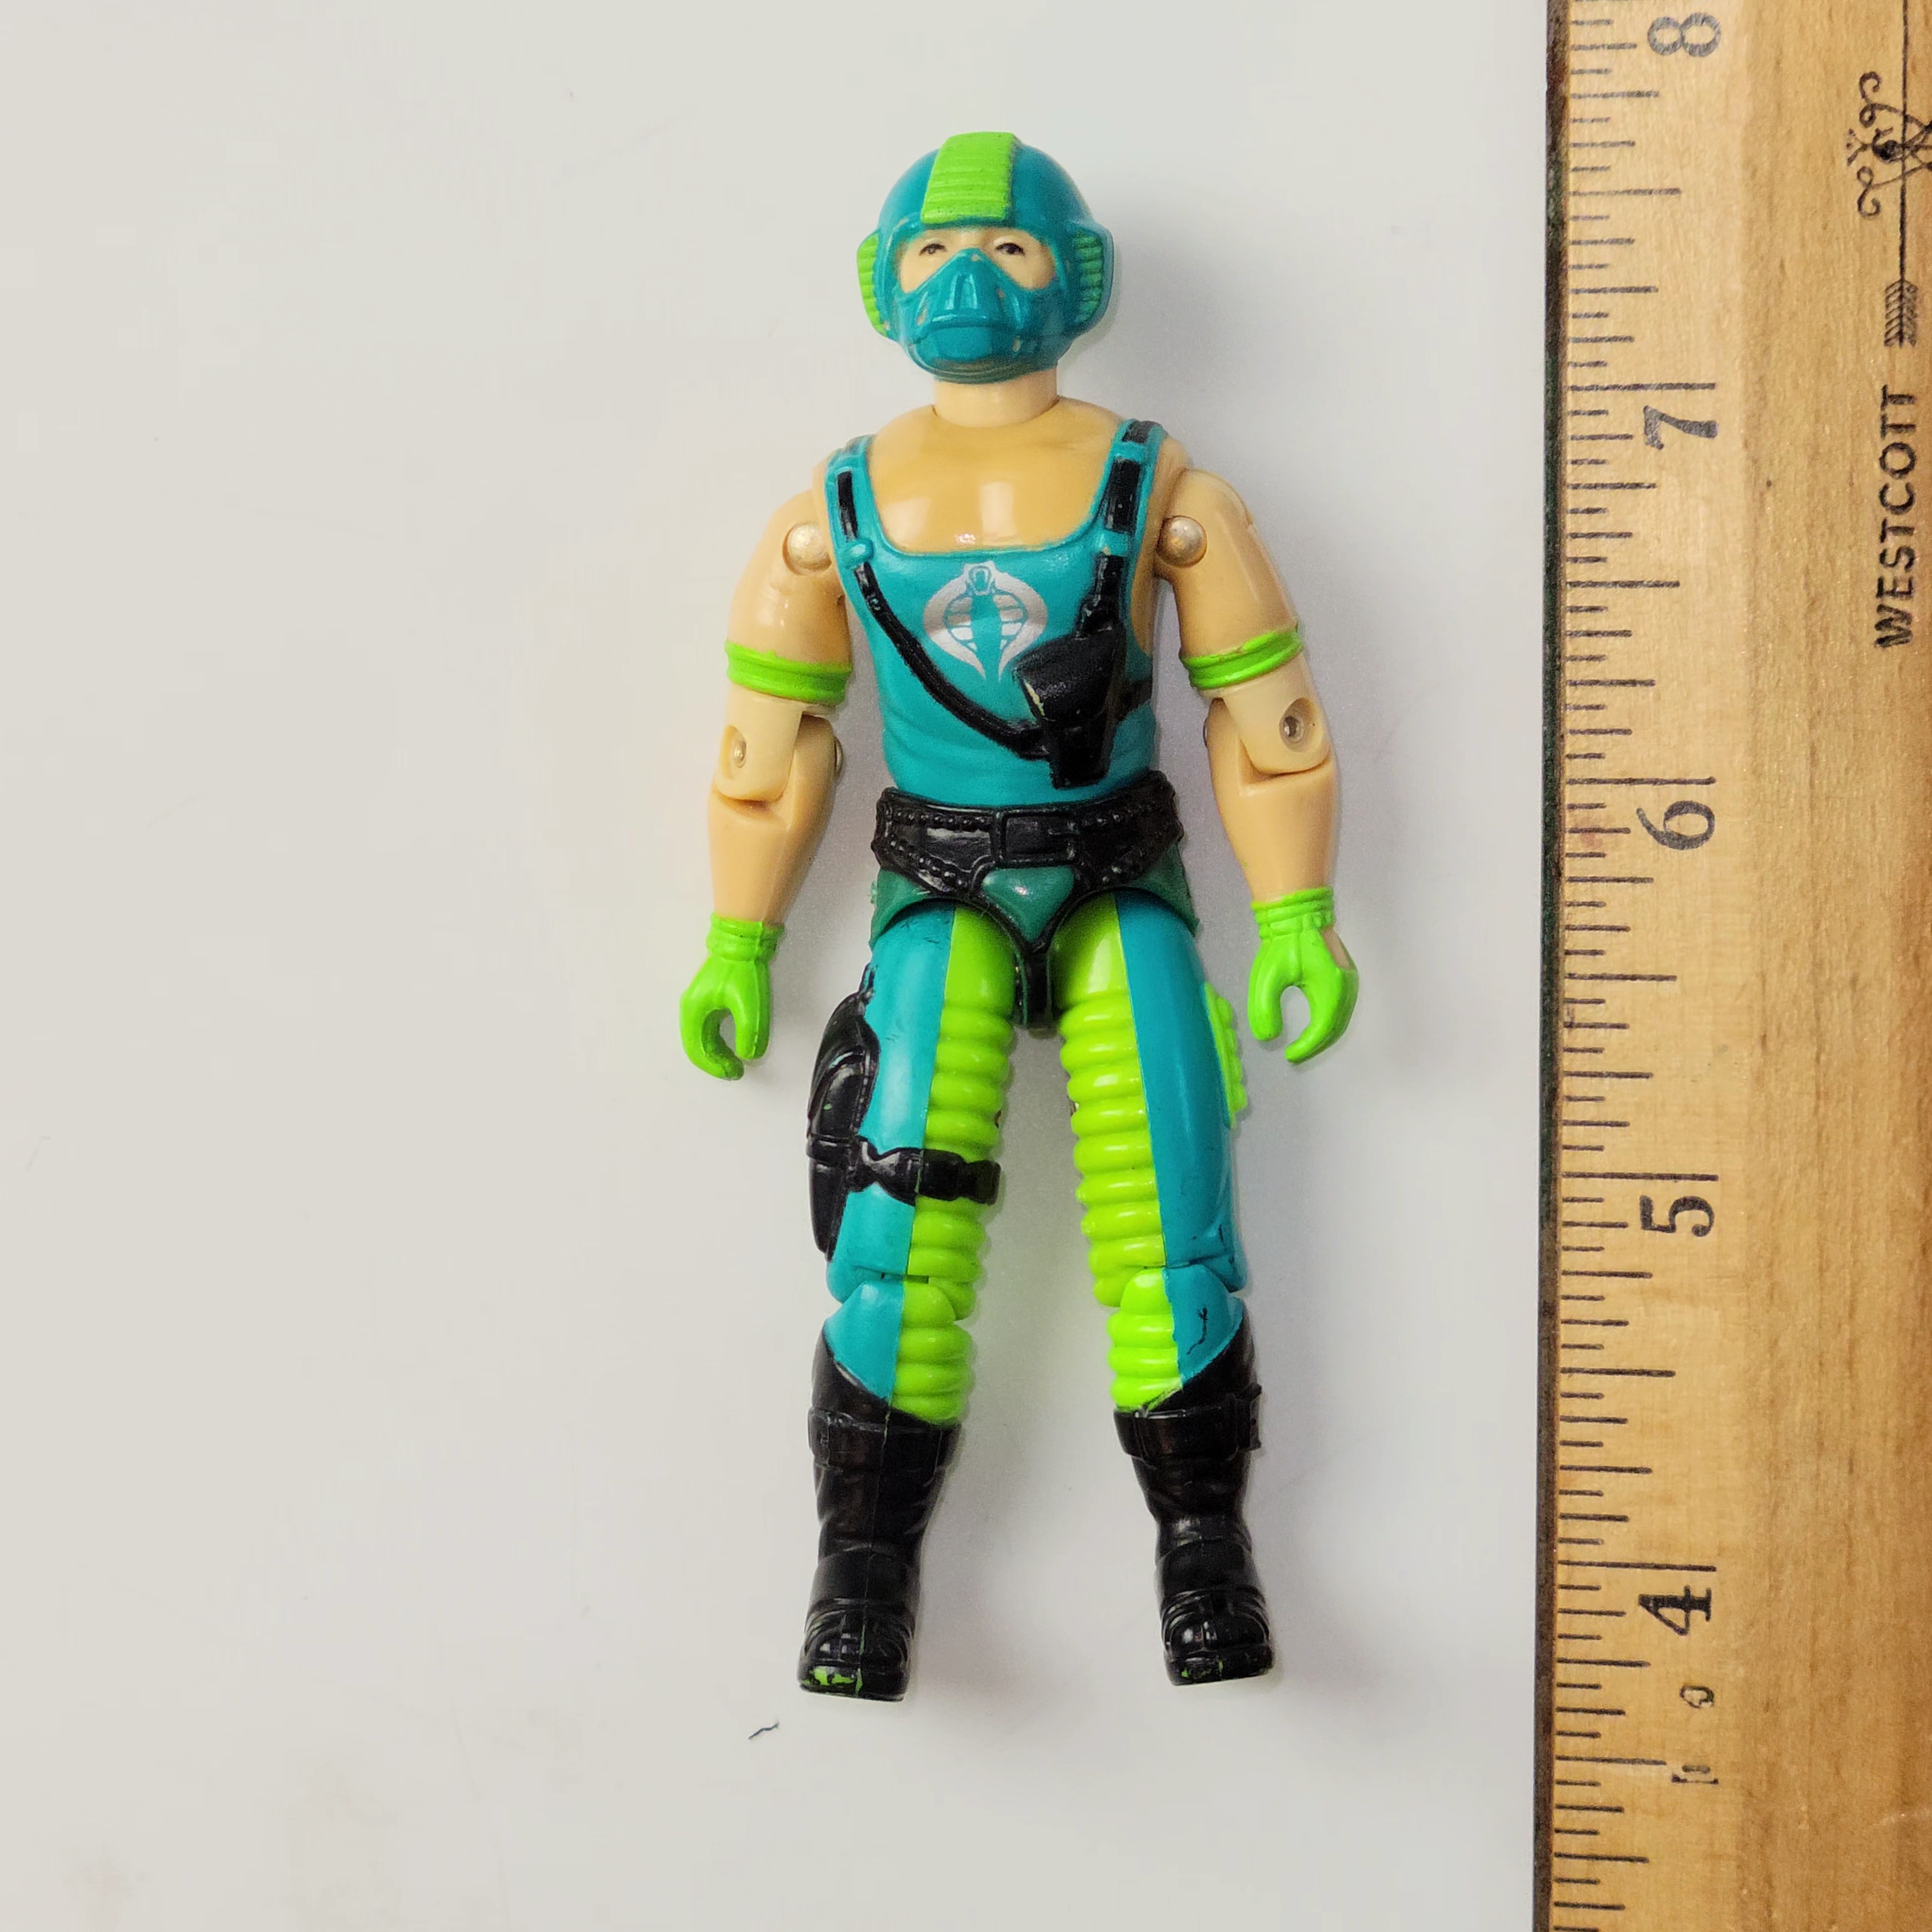 GI Joe Copperhead 1984 Action Figure Toy